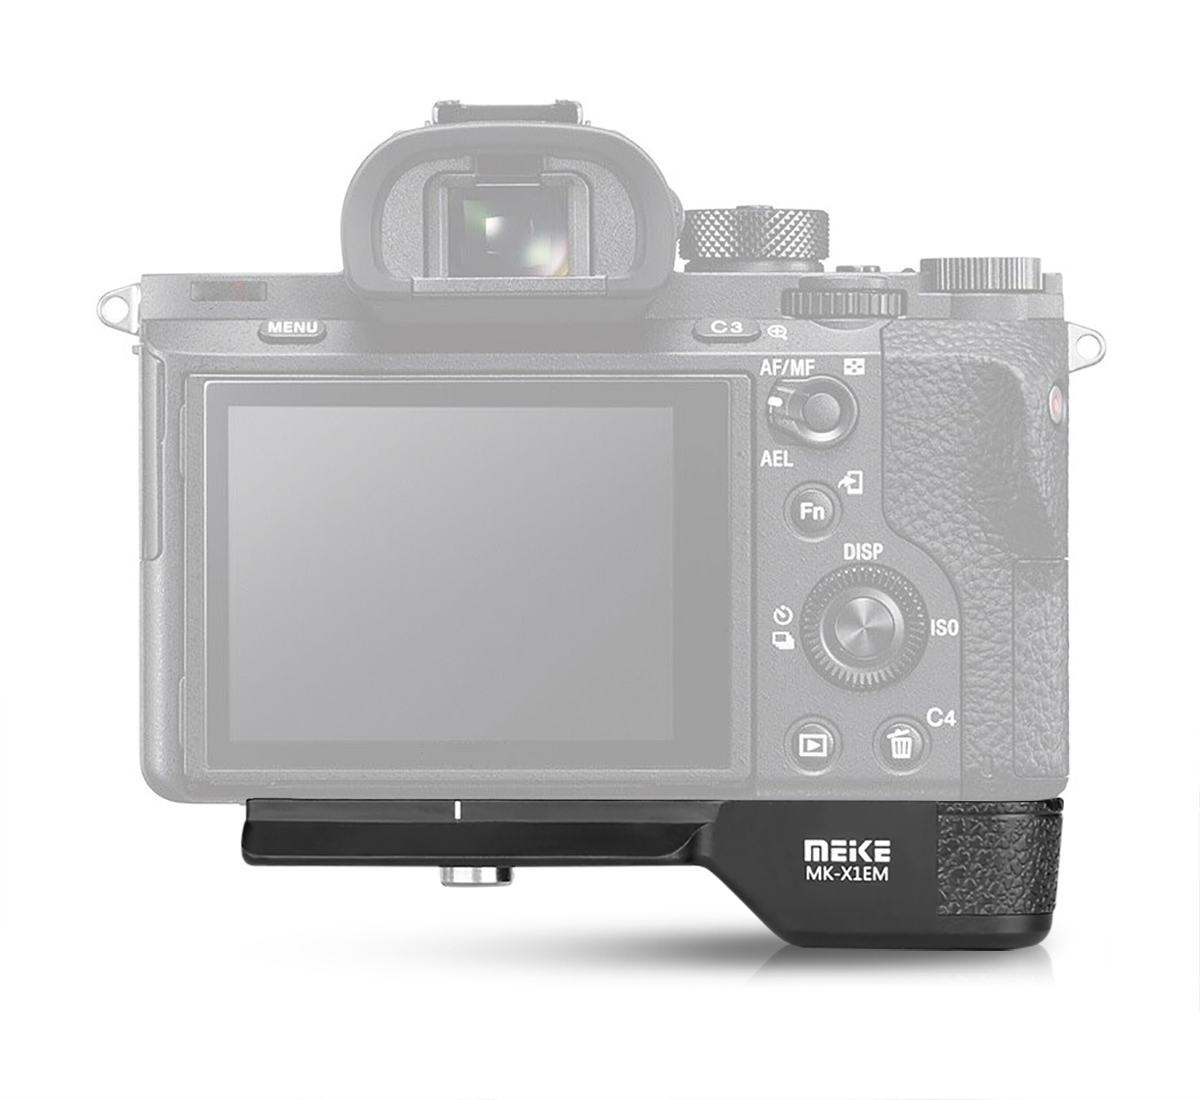 Kamera-Halterung Meike MK-XIEM für Sony Alpha A9, A7M3, A7R3, A7M2, A7R2M2 Systemkameras